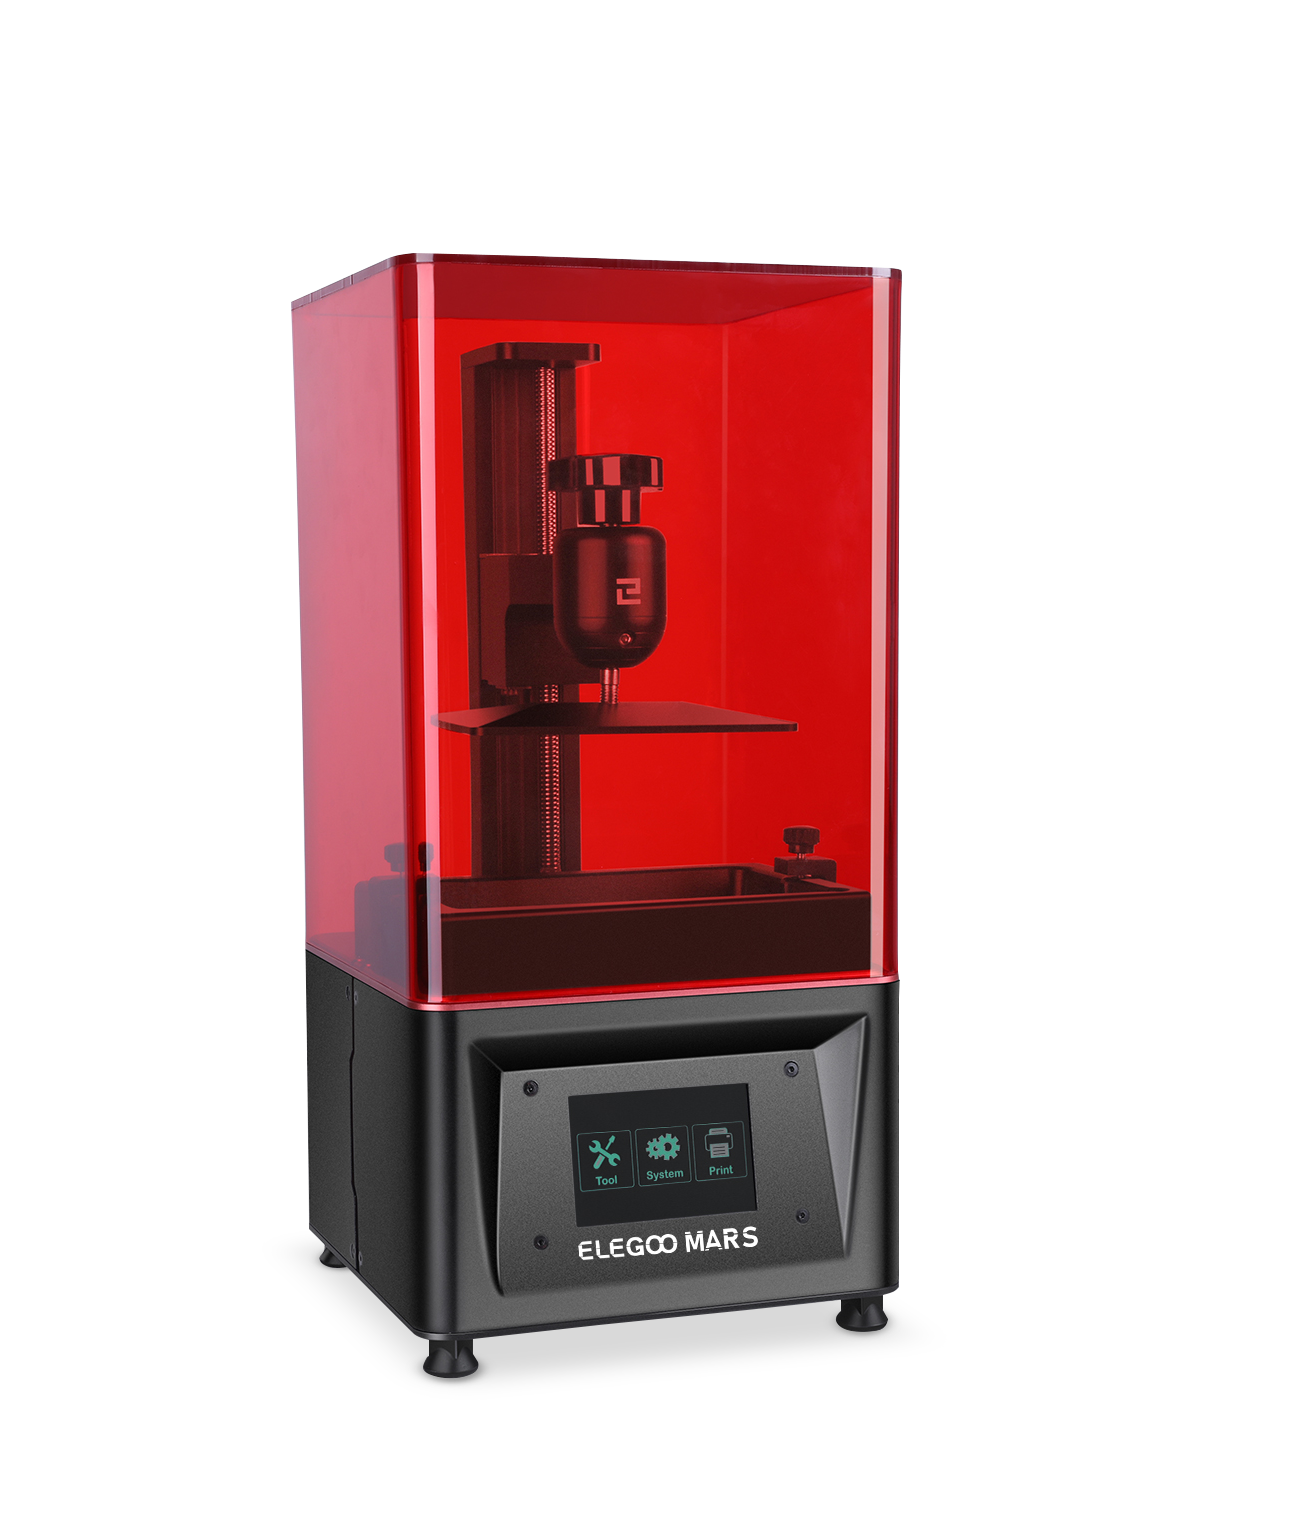 MyMiniFactory Limited Edition Elegoo Mars Resin 3D Printer - First Look 